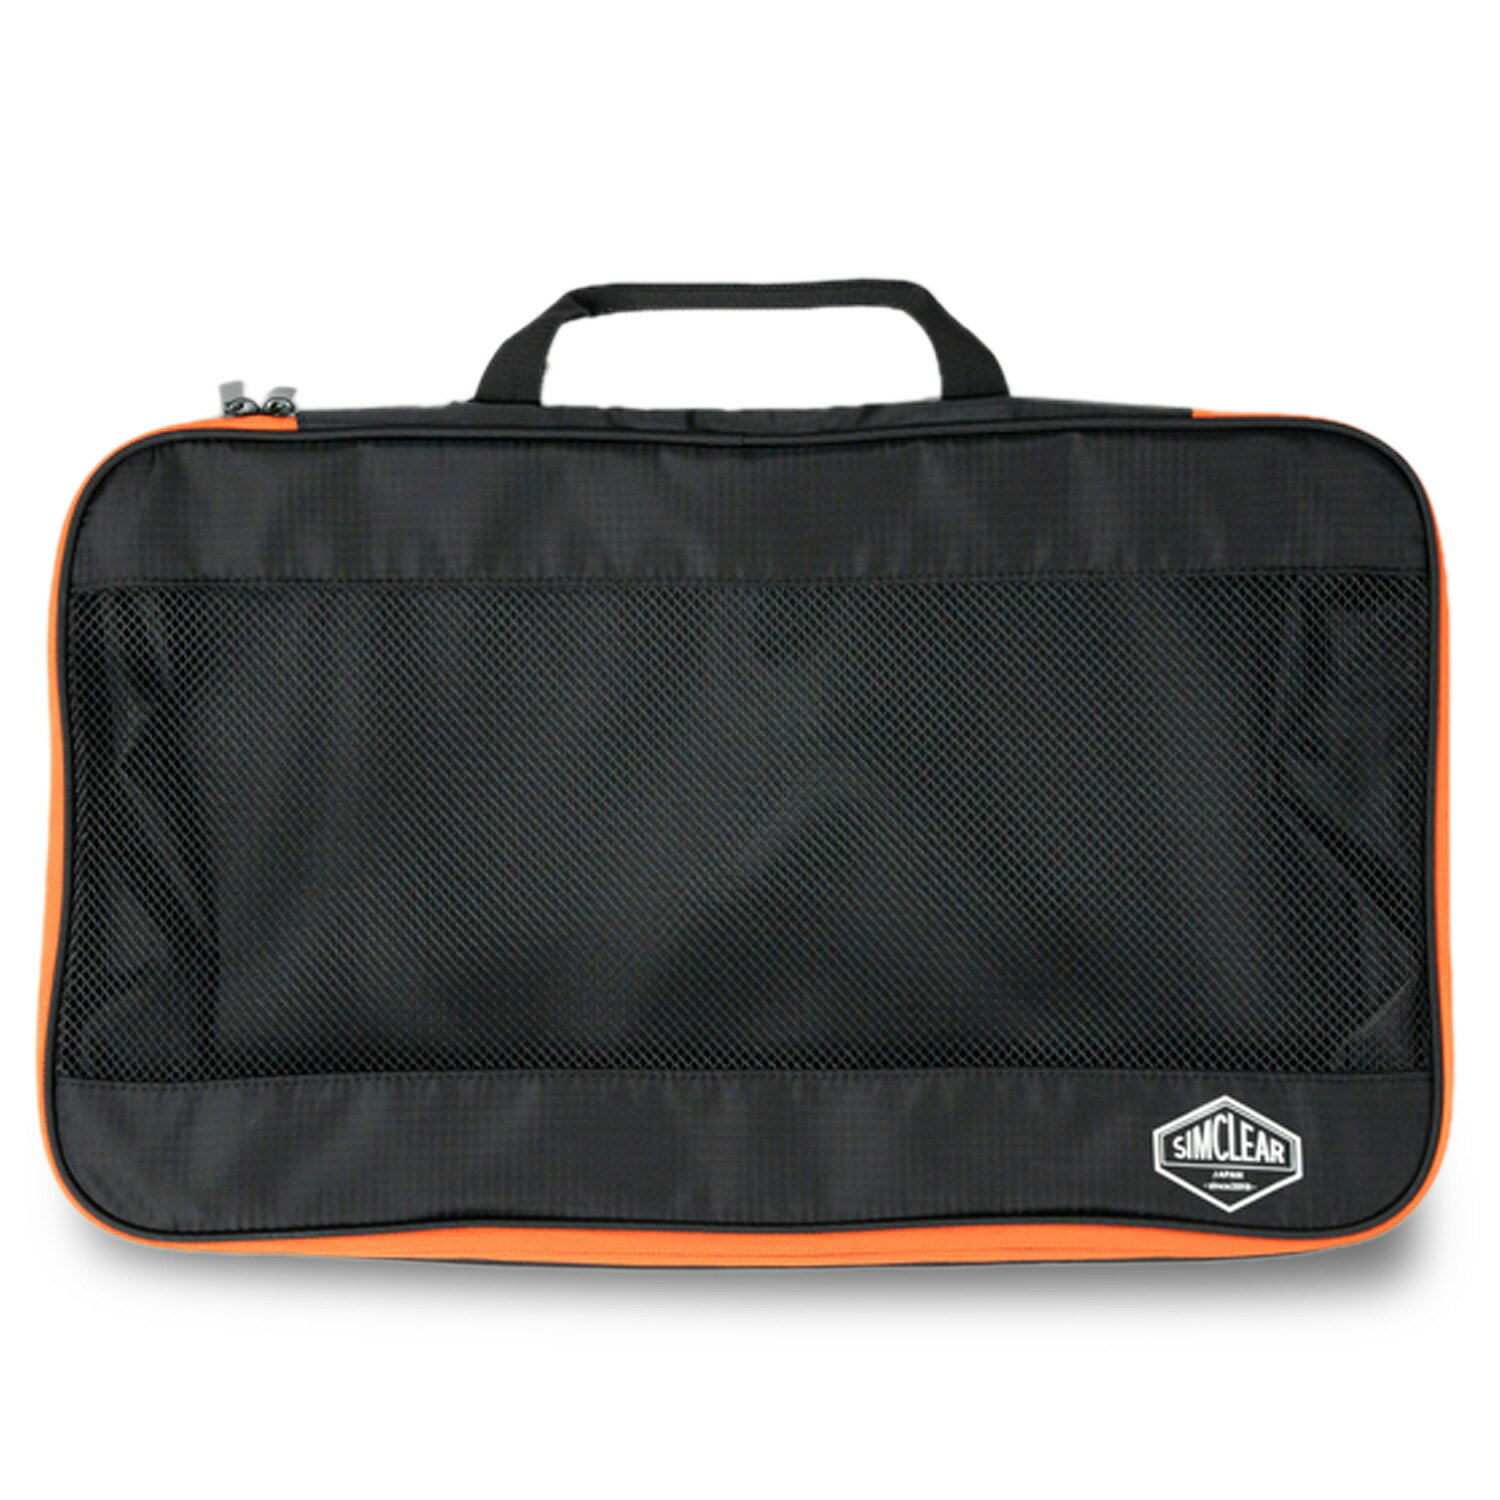 SIMCLEAR TRAVEL POACH シムクリア トラベルポーチ 旅行用圧縮袋 収納 メンズ レディース 衣類 ビジネス ブラック 黒 AC01